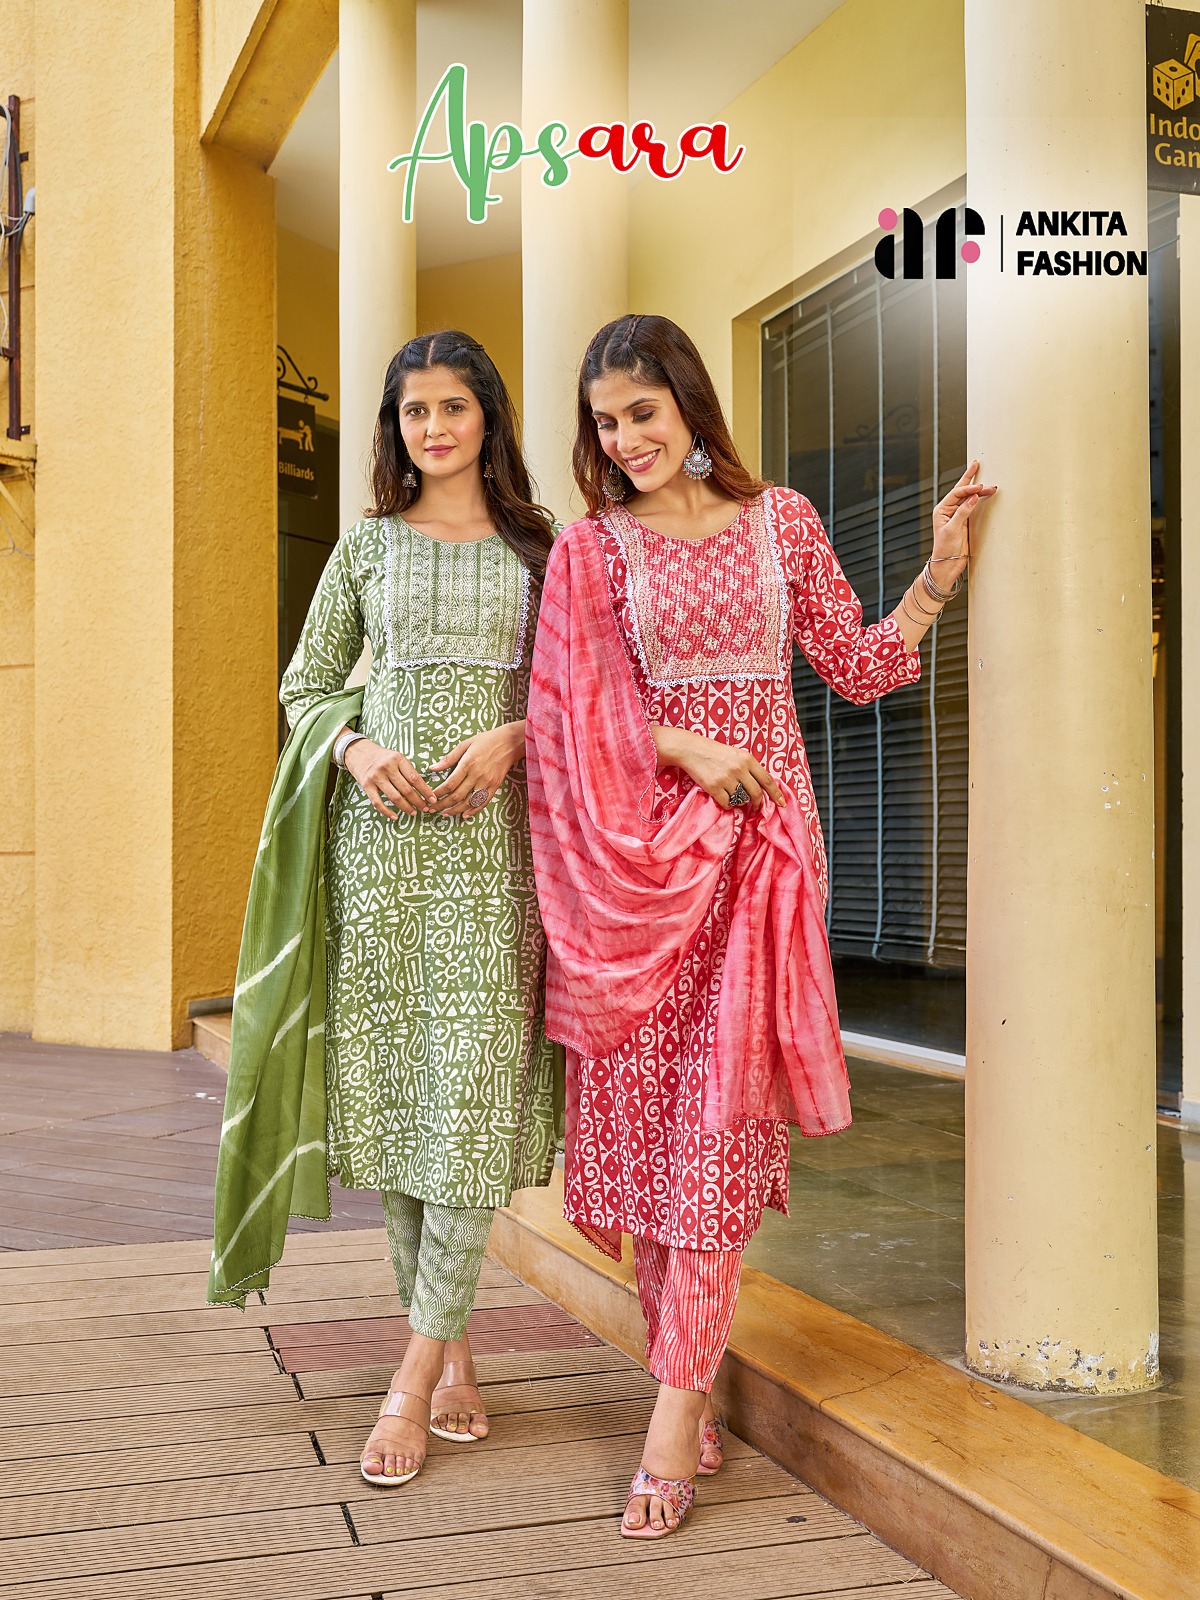 Ankita fashion Apsara collection 7